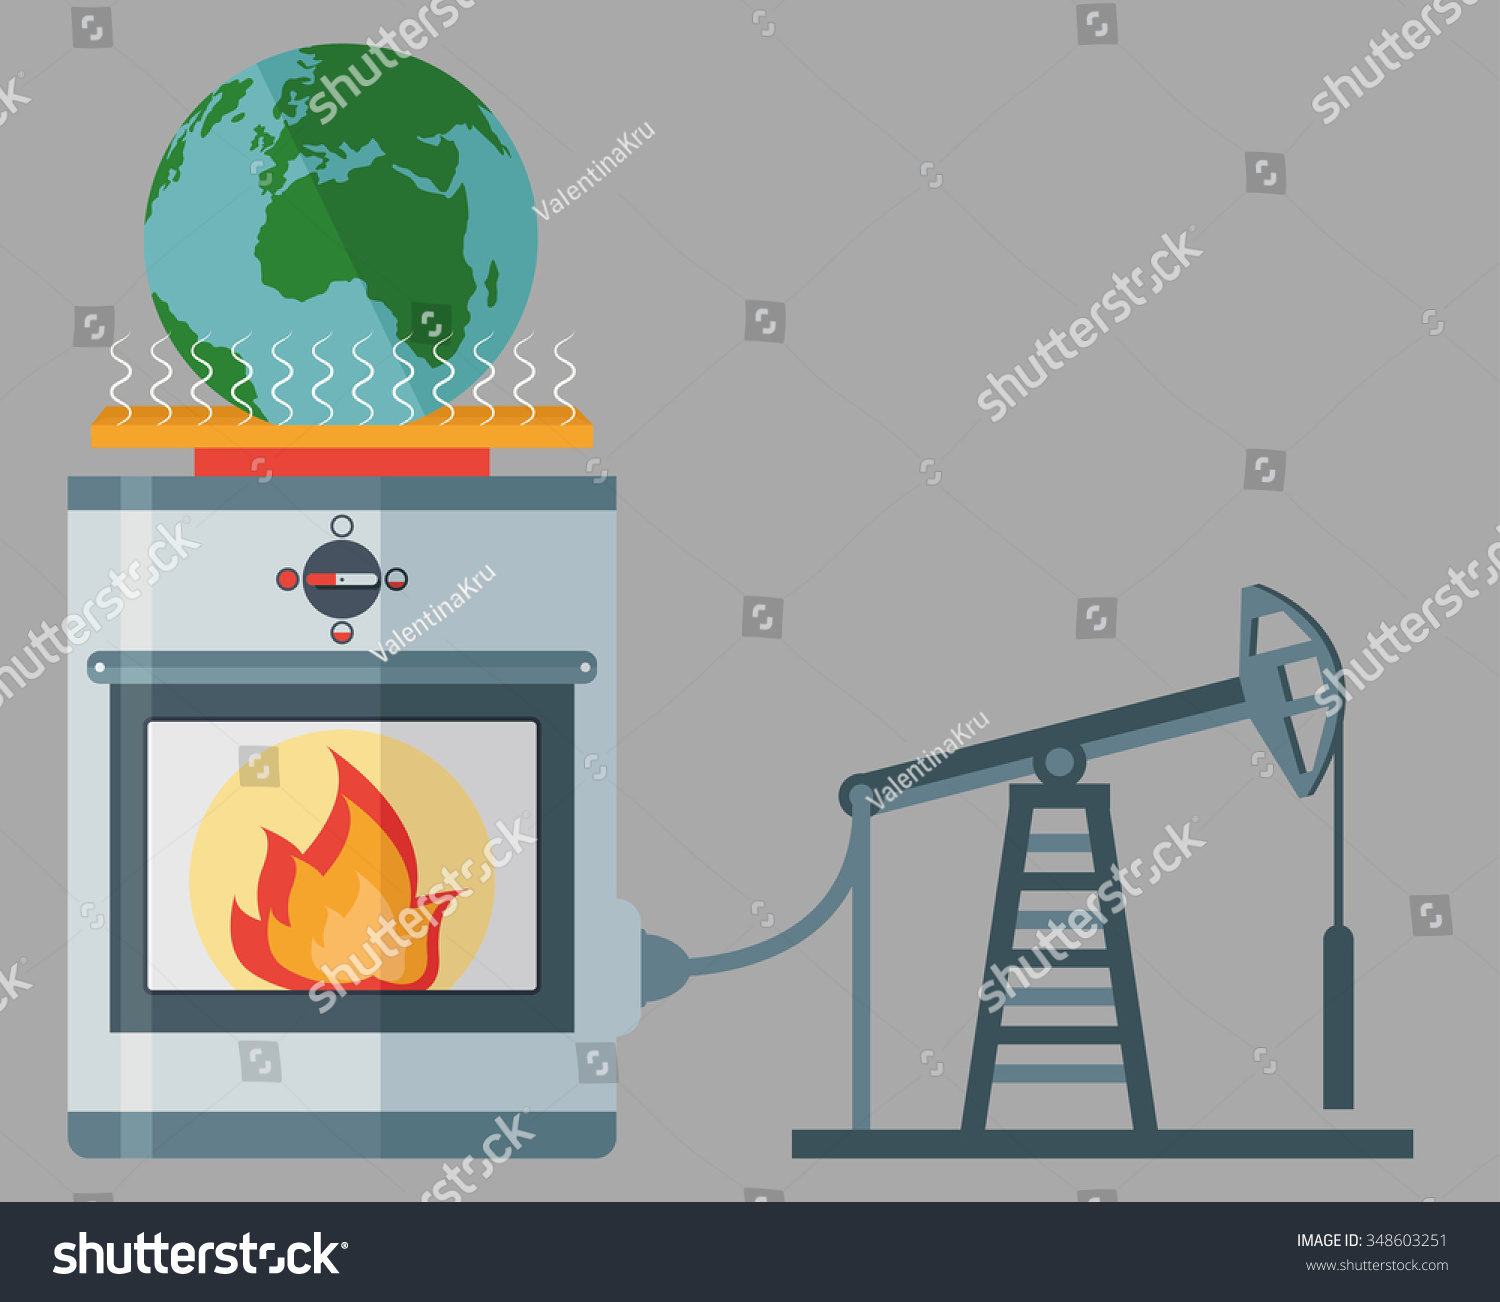 1,888 Burning fossil fuels Stock Illustrations, Images & Vectors